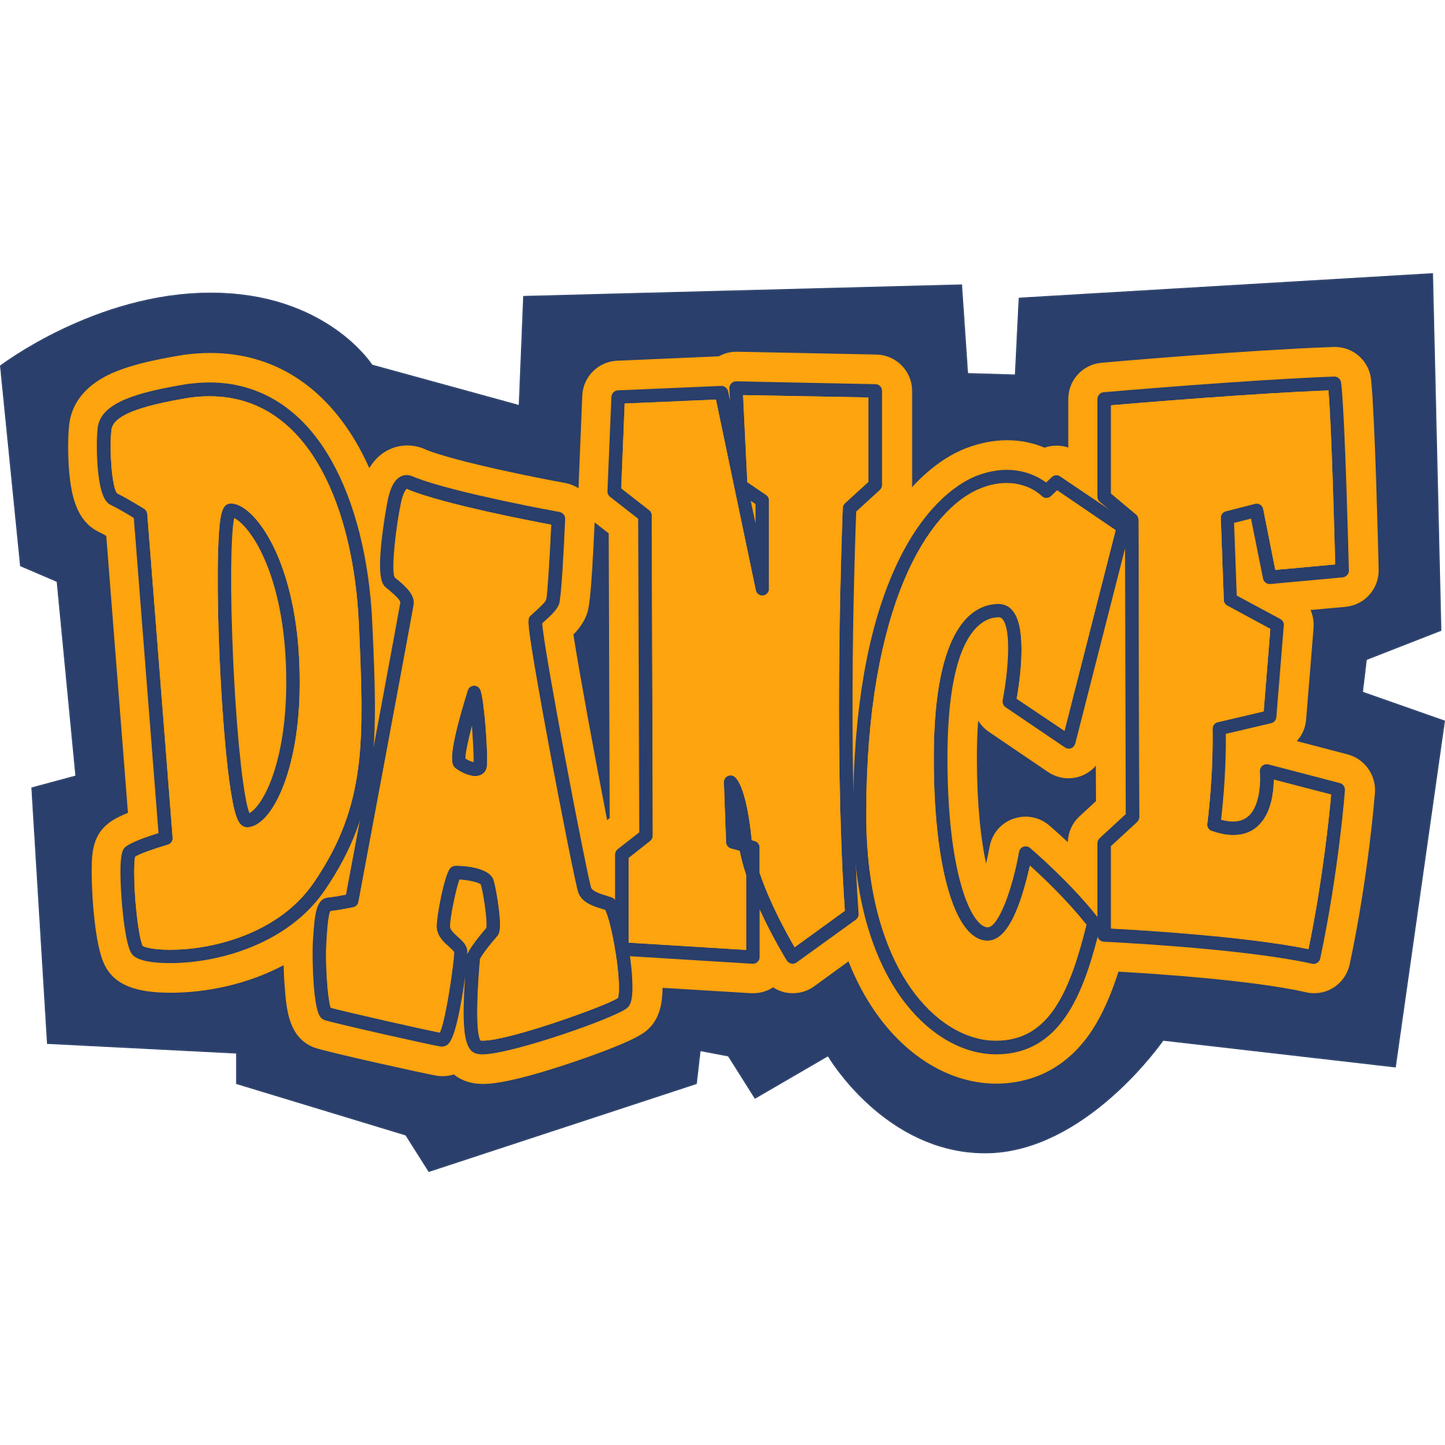 TDANCE - Dance Sleeve Patch